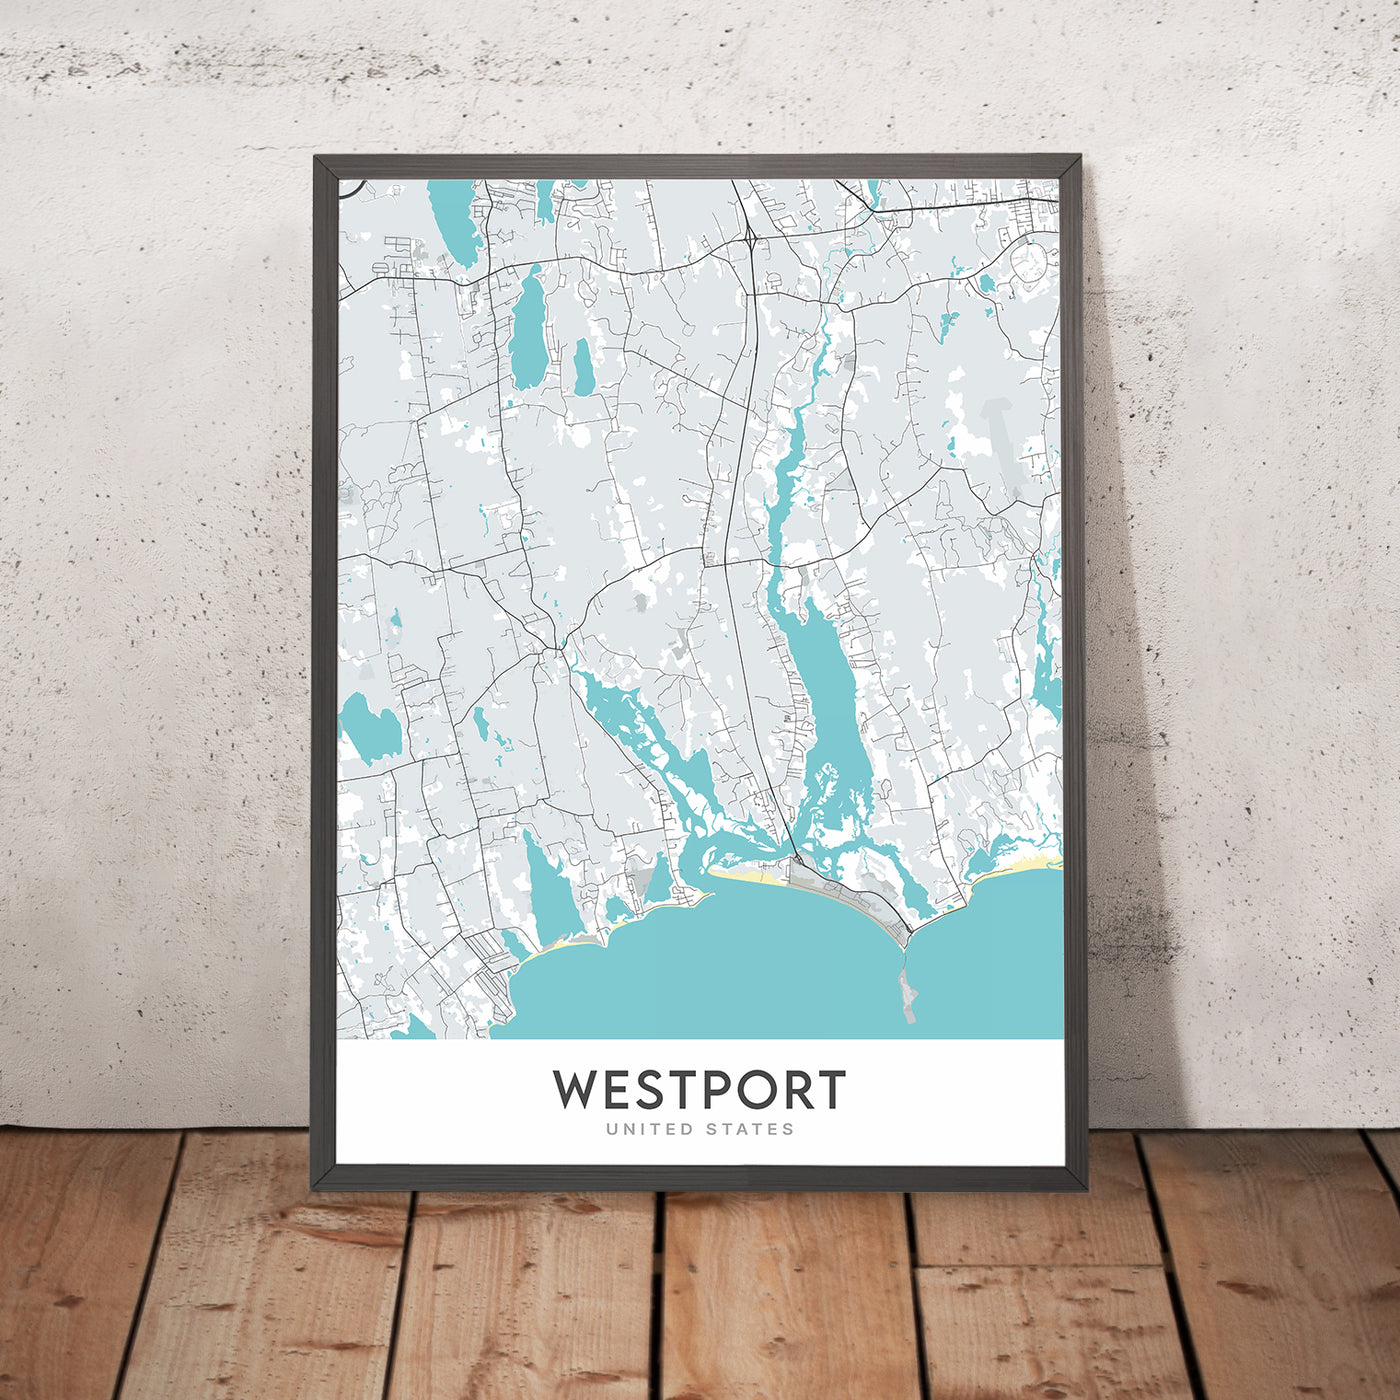 Modern City Map of Westport, Massachusetts: Horseneck Beach, Westport Town Hall, Westport Public Library, Westport Historical Society, The Point